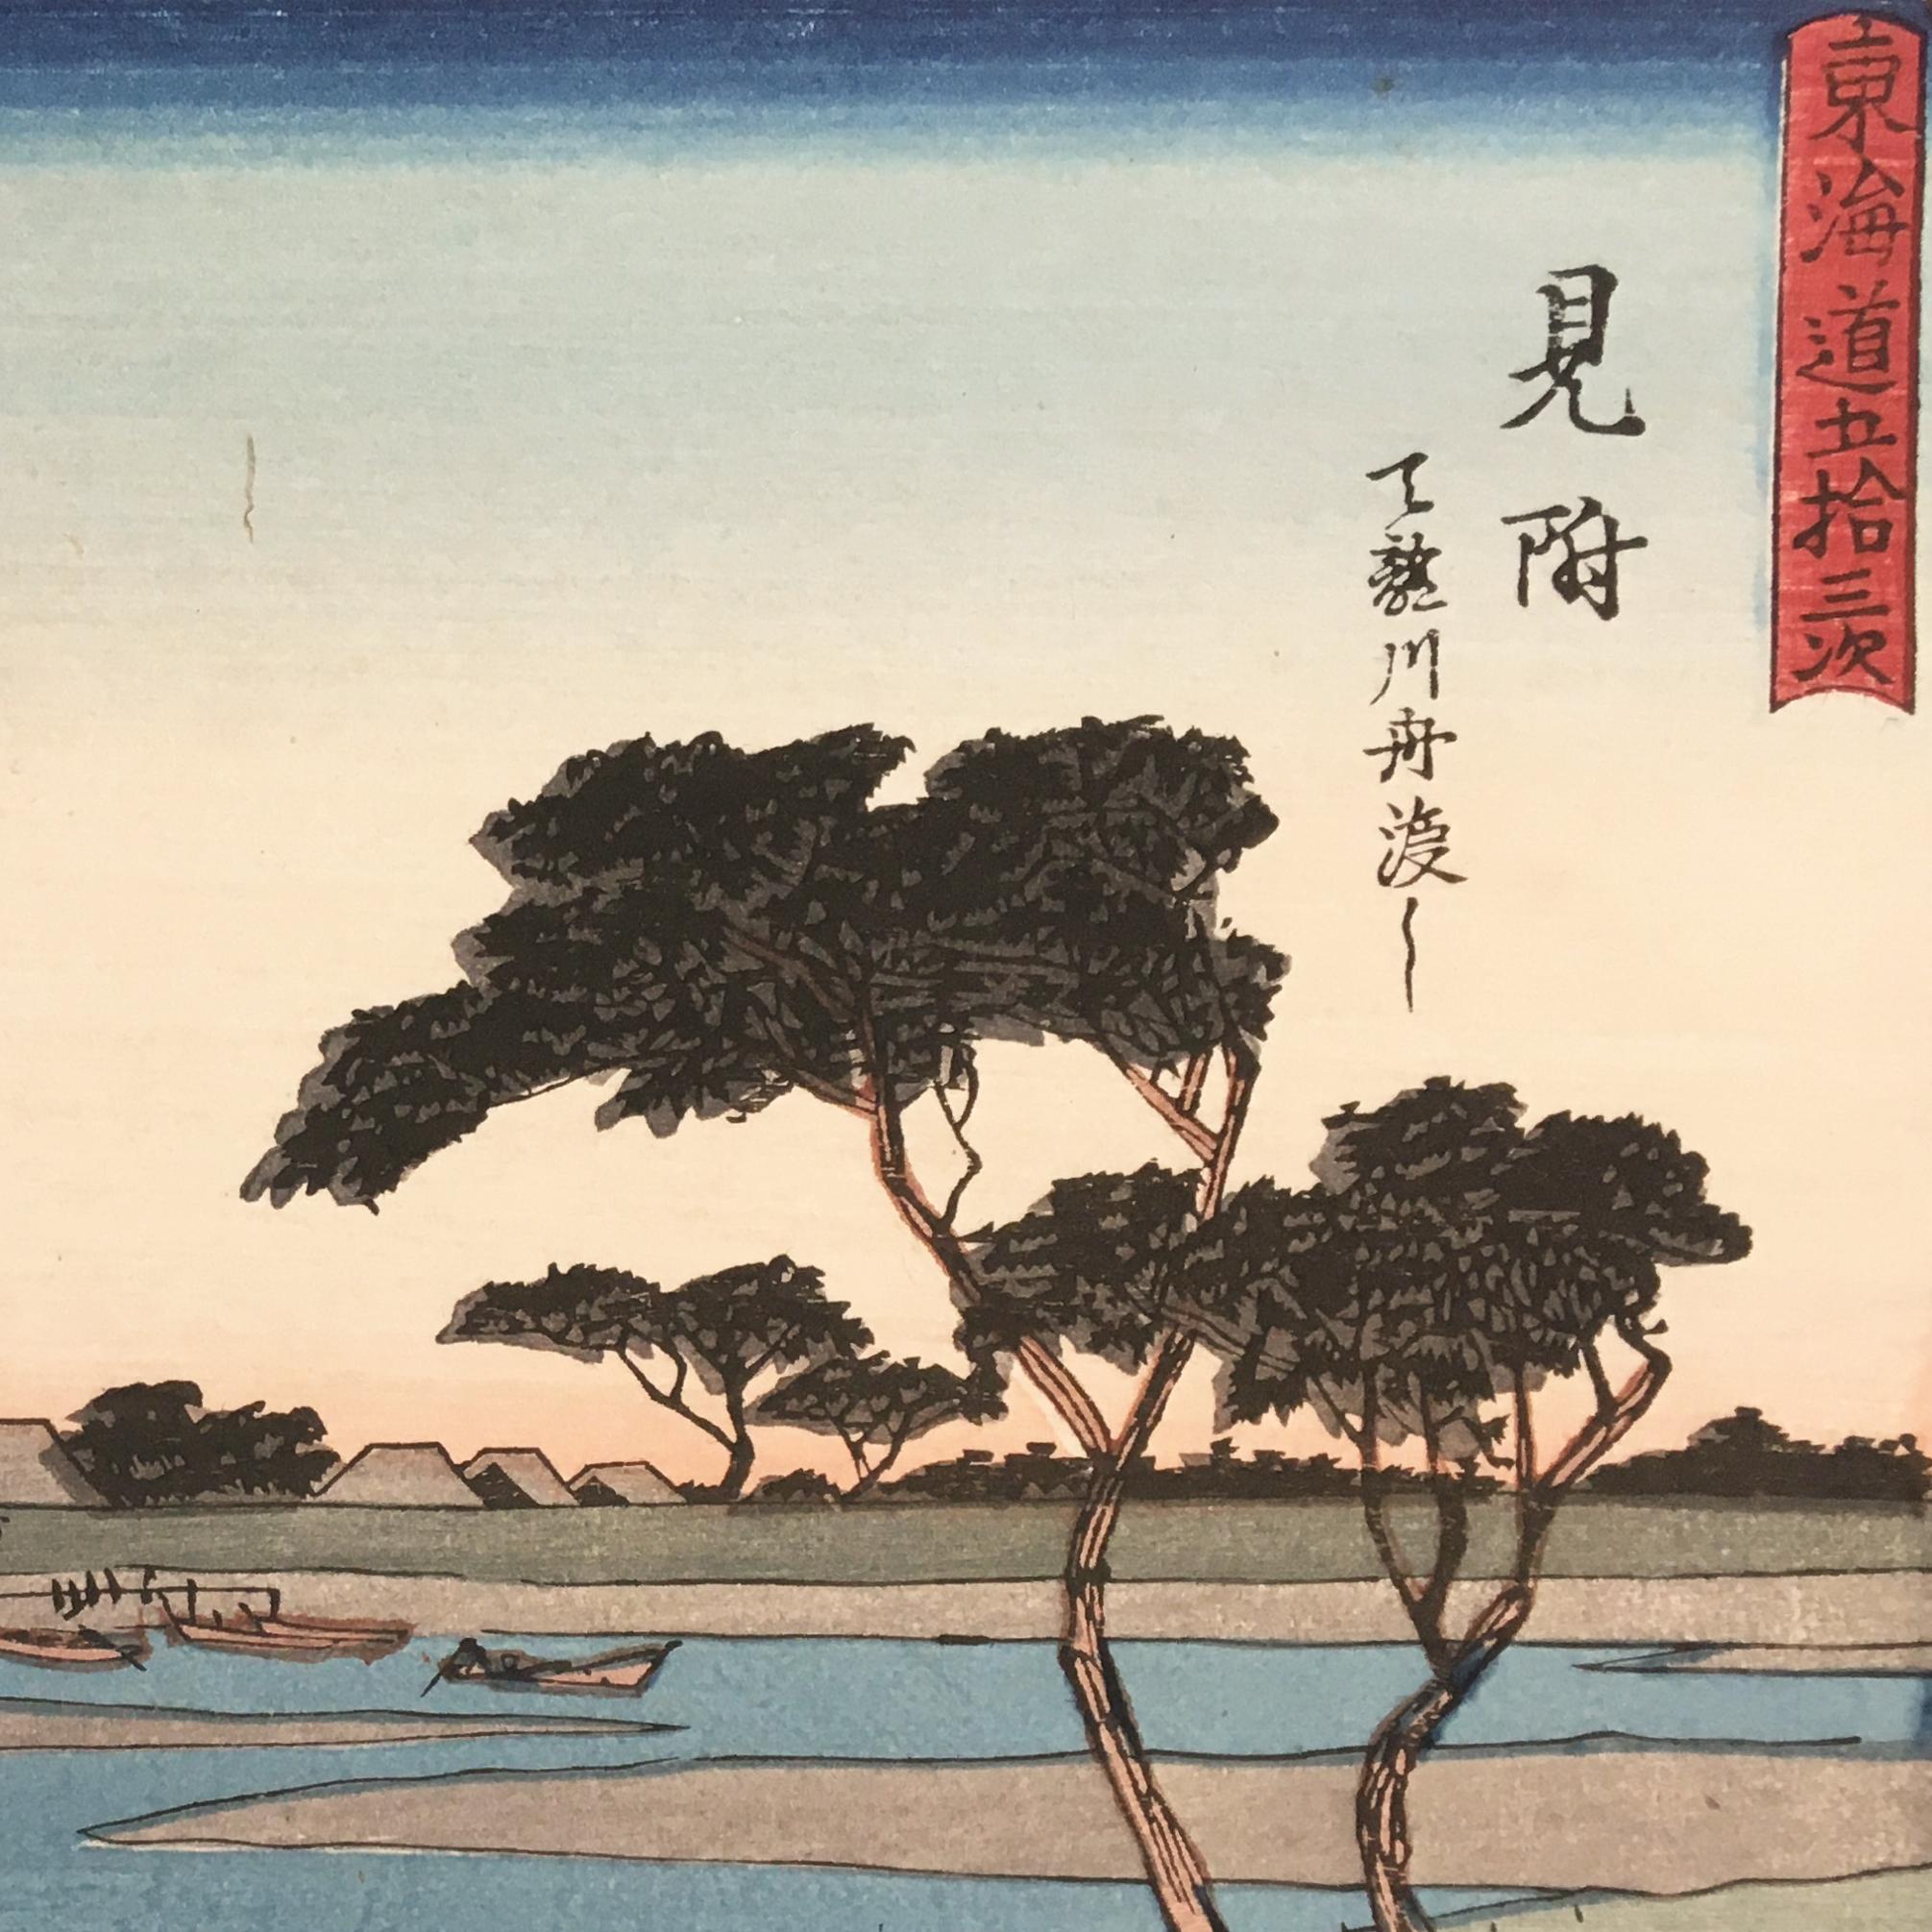 'View of Mitsuke', After Utagawa Hiroshige, Ukiyo-E Woodblock, Tokaido, Edo - Print by Utagawa Hiroshige (Ando Hiroshige)